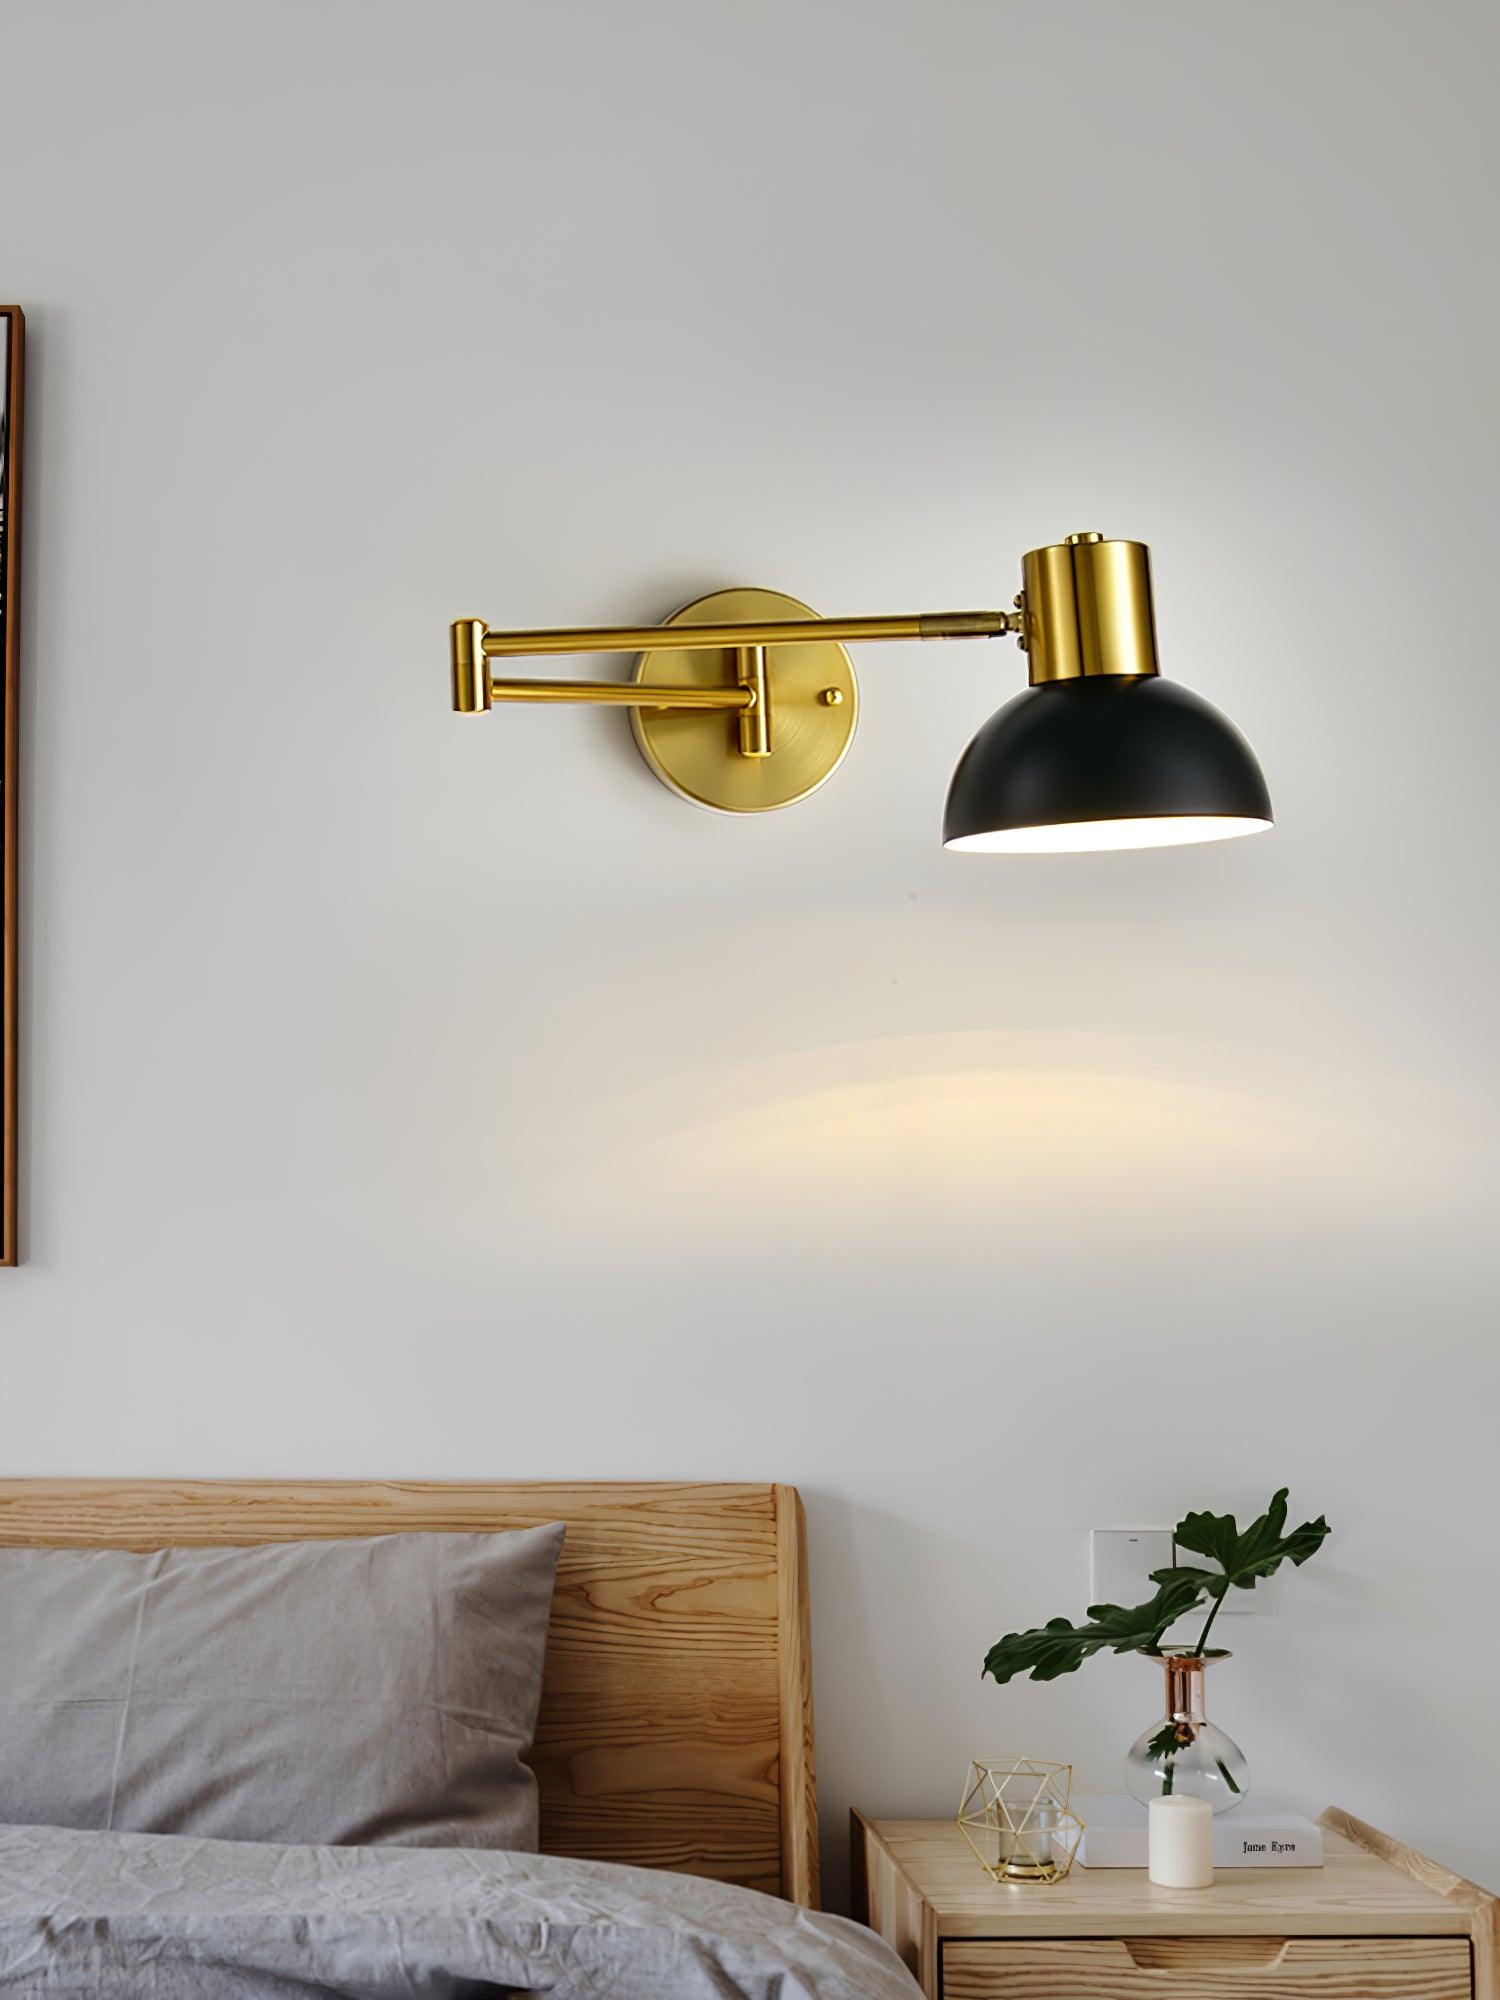 LED Wandlampe mit Safe Tresor Wandsafe Versteck LED Wandlampe Lampe  kabellos | Chriluka - Ihr Onlineshop im Internet